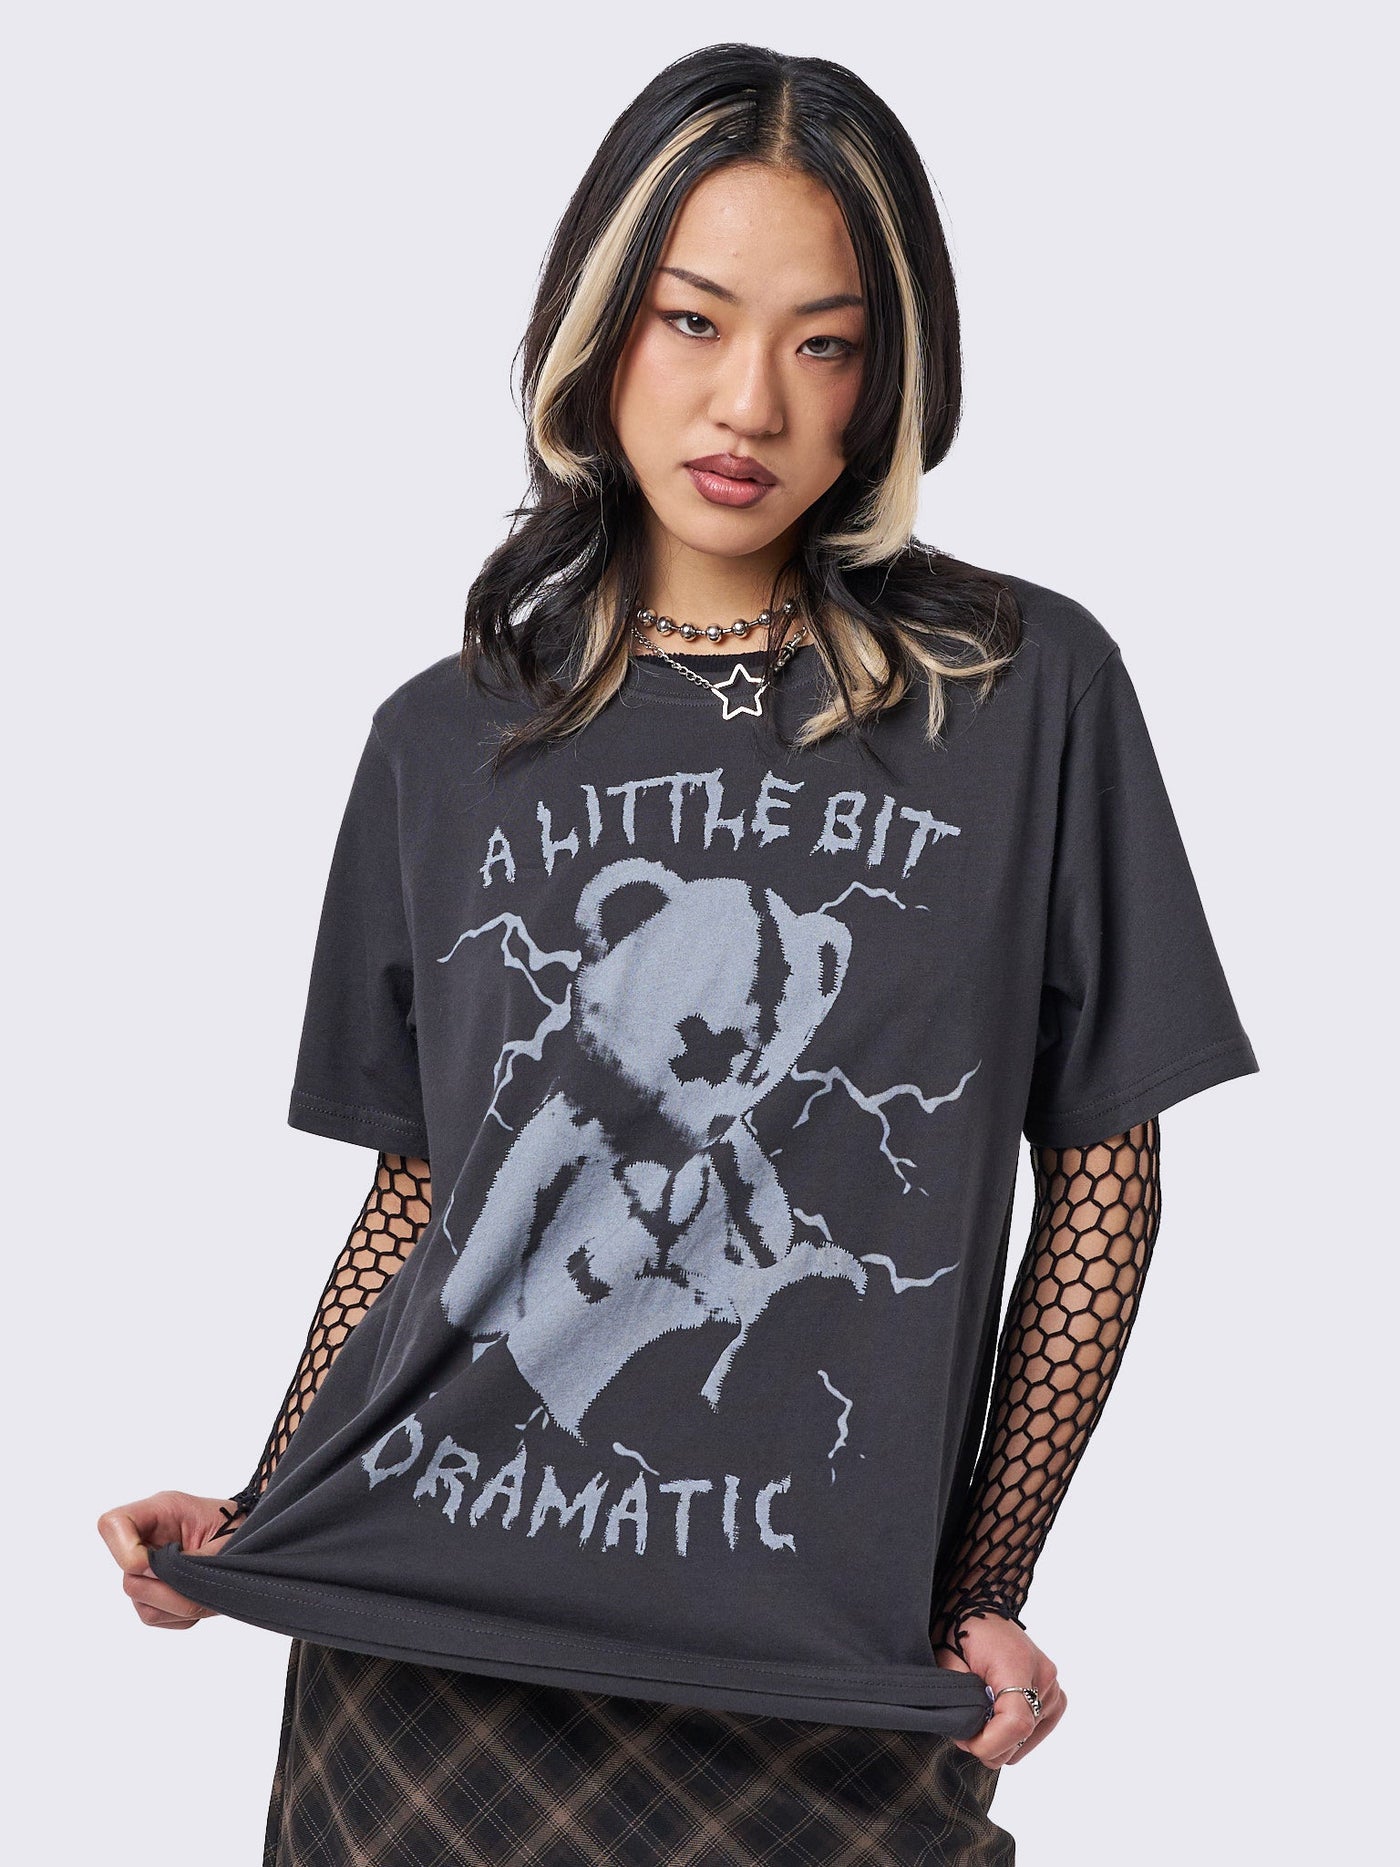 Dramatic Teddy Graphic T-shirt